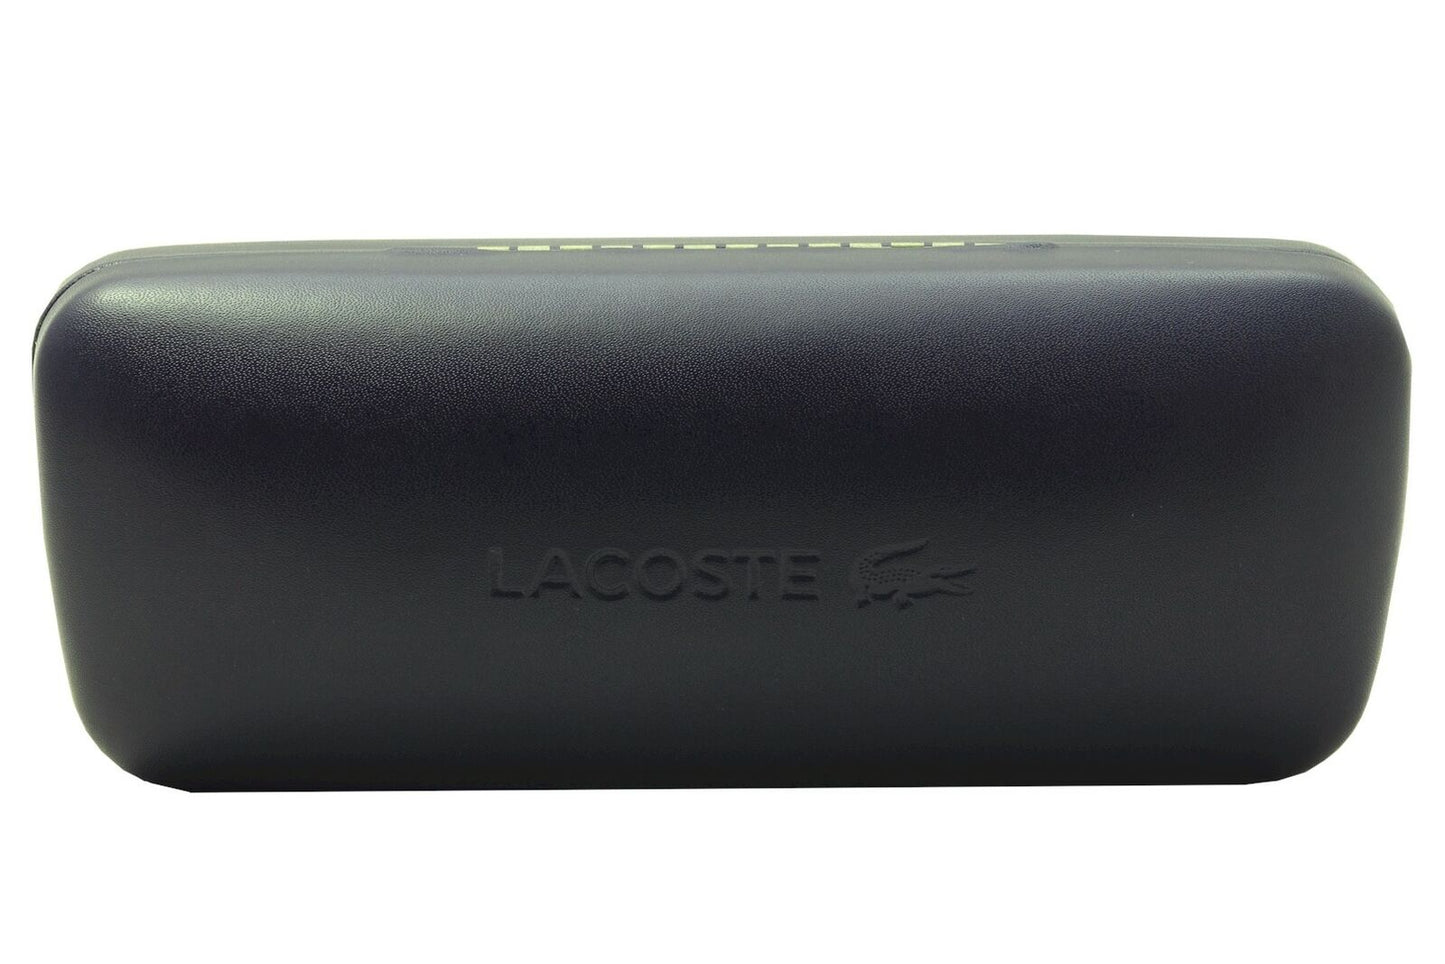 Lacoste L3620-214 48mm New Eyeglasses